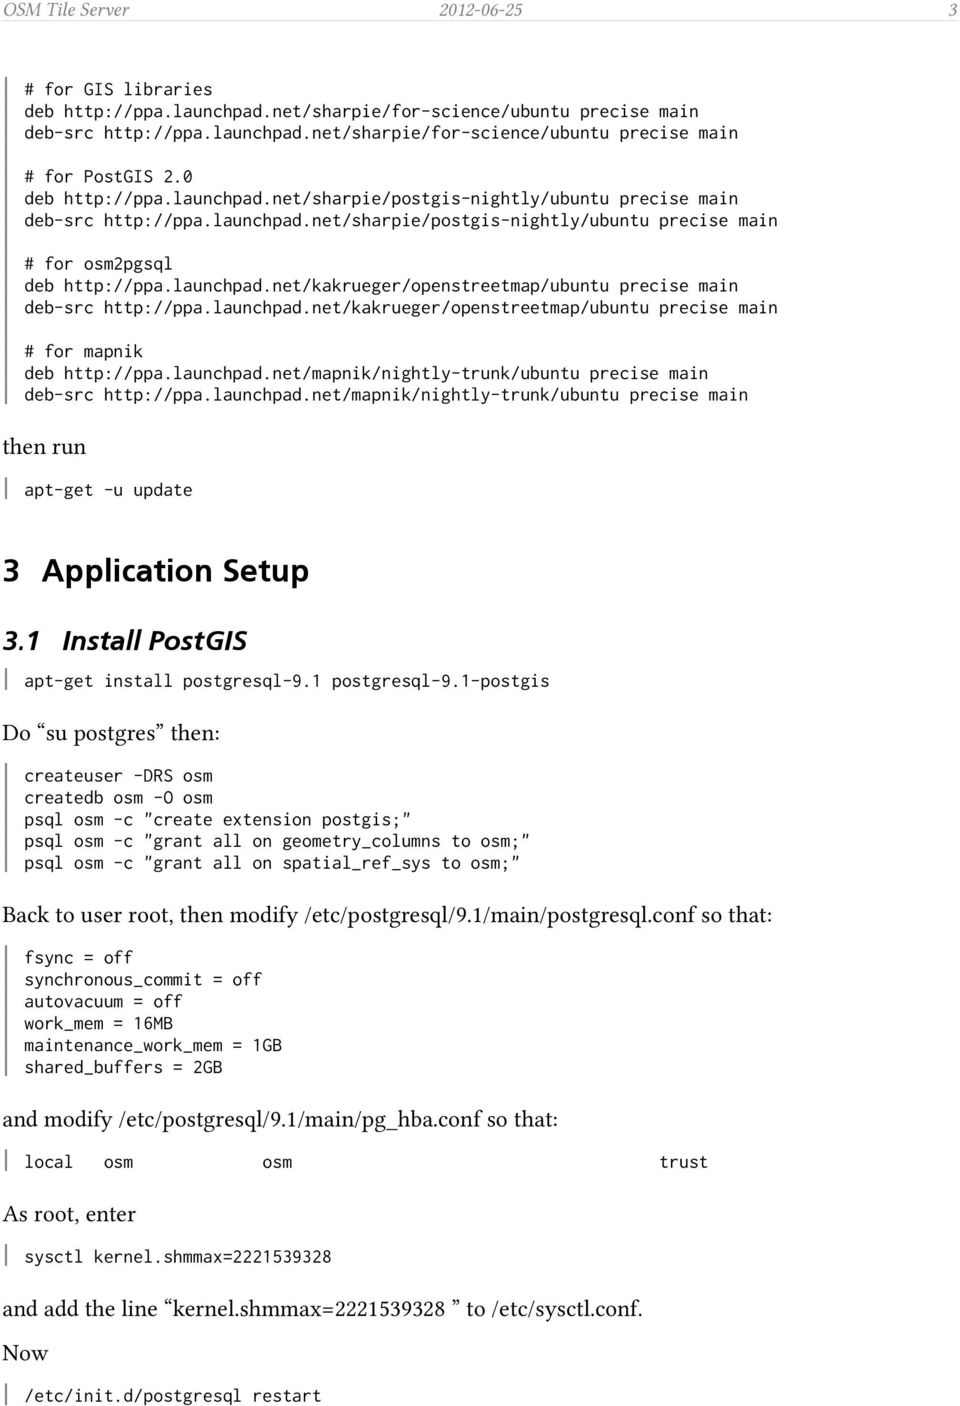 launchpad.net/kakrueger/openstreetmap/ubuntu precise main # for mapnik deb http://ppa.launchpad.net/mapnik/nightly-trunk/ubuntu precise main deb-src http://ppa.launchpad.net/mapnik/nightly-trunk/ubuntu precise main then run apt-get -u update 3 Application Setup 3.